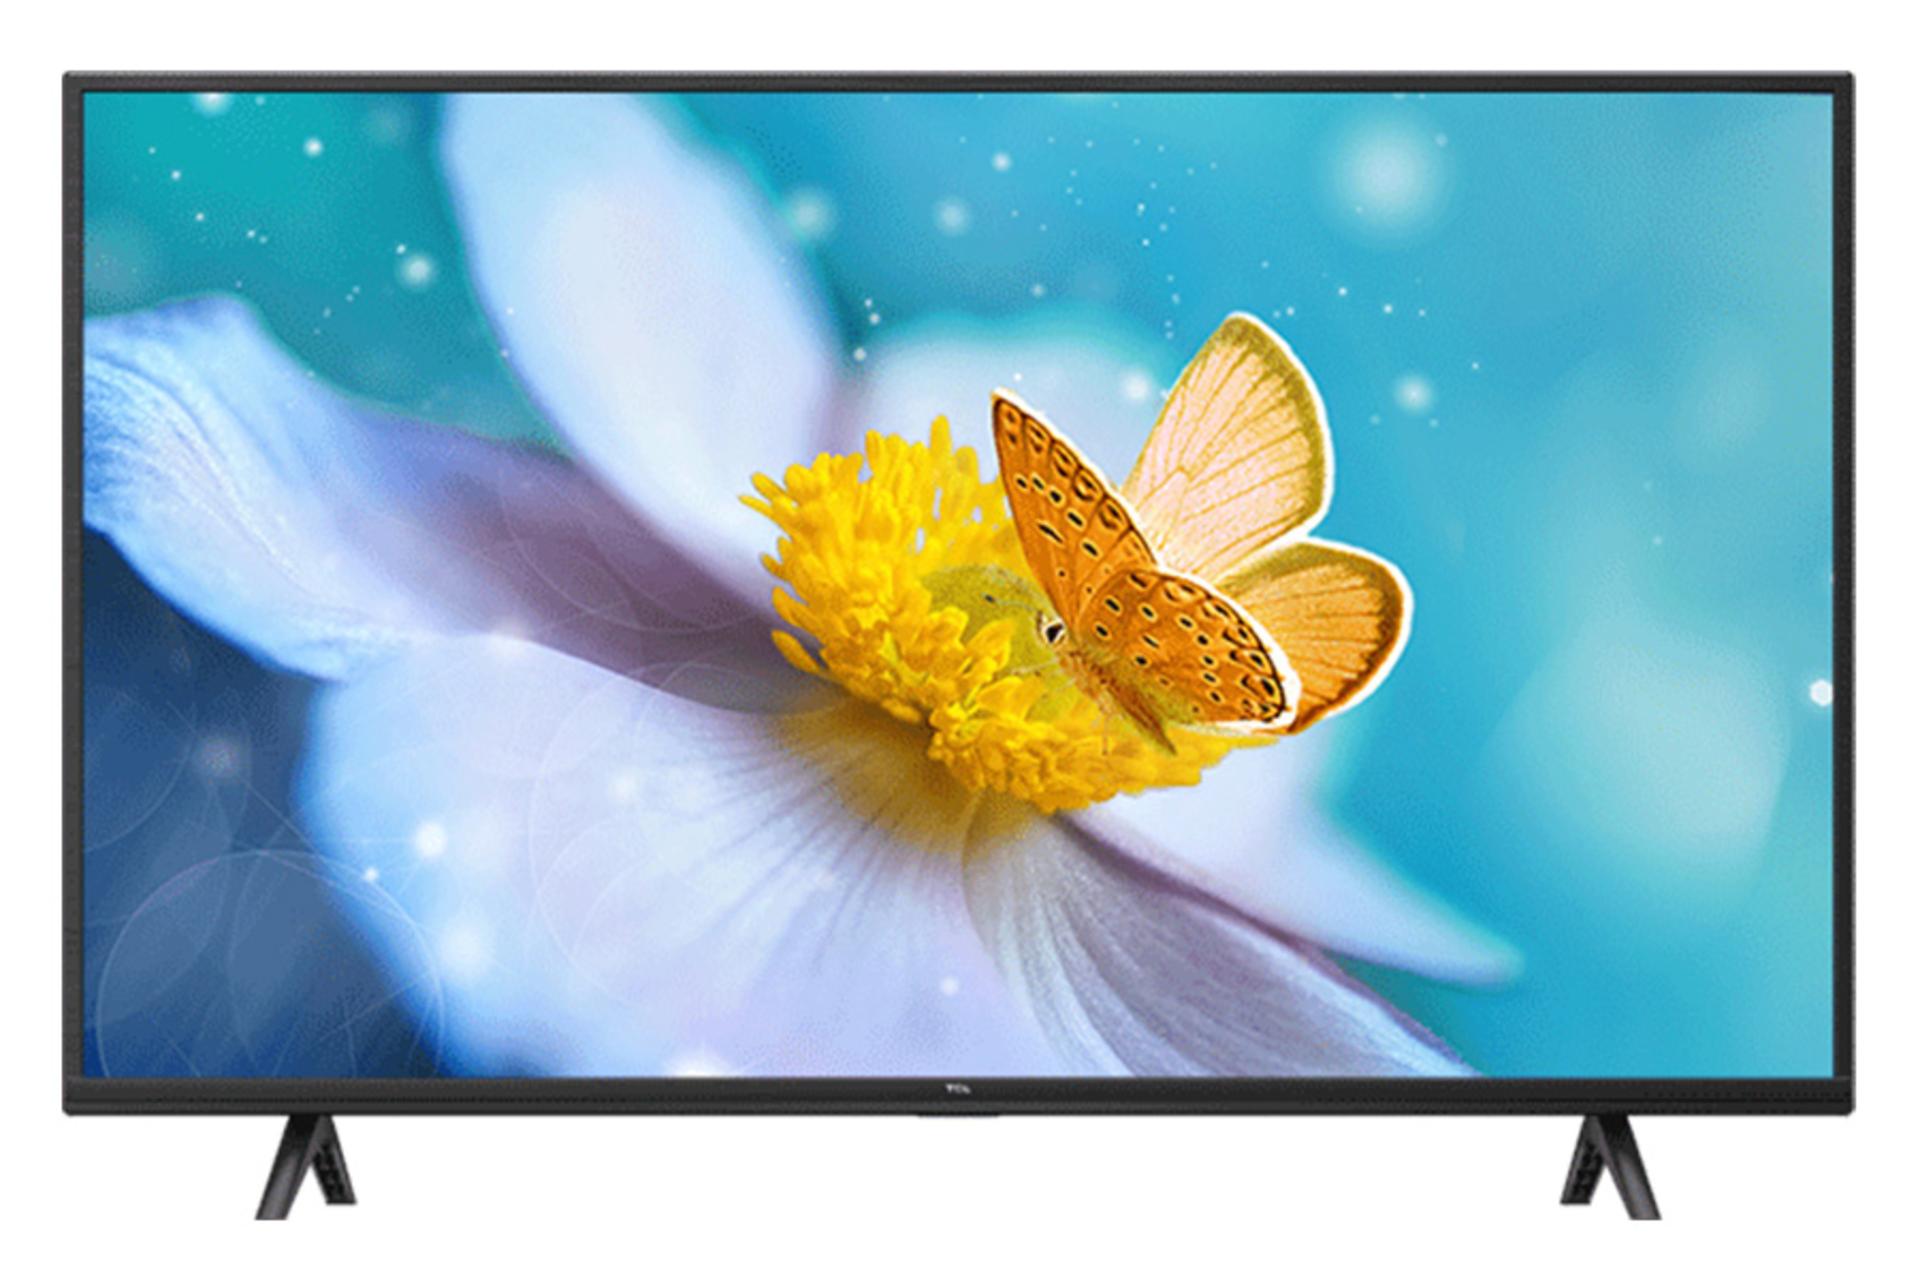 قیمت تلویزیون تی سی ال D3200i مدل 43 اینچ + مشخصات